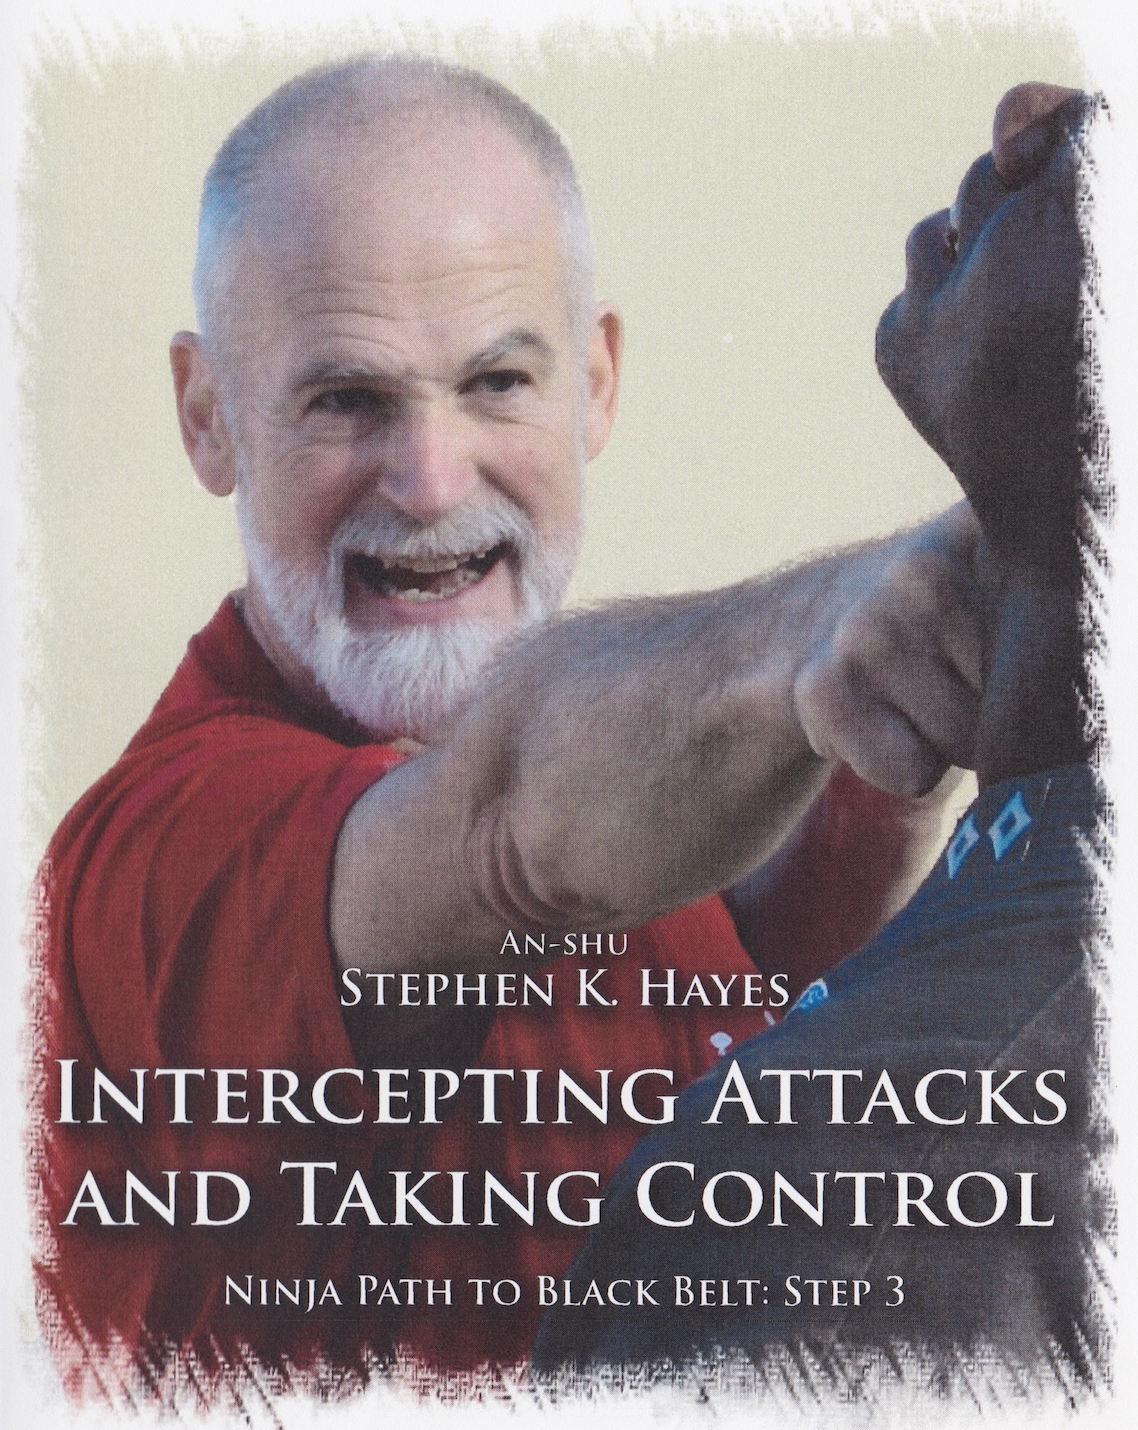 Ninja Path to Black Belt 3: Lightning Strikes: Intercepting Attacks & Taking Control 3 DVD Set with Stephen Hayes